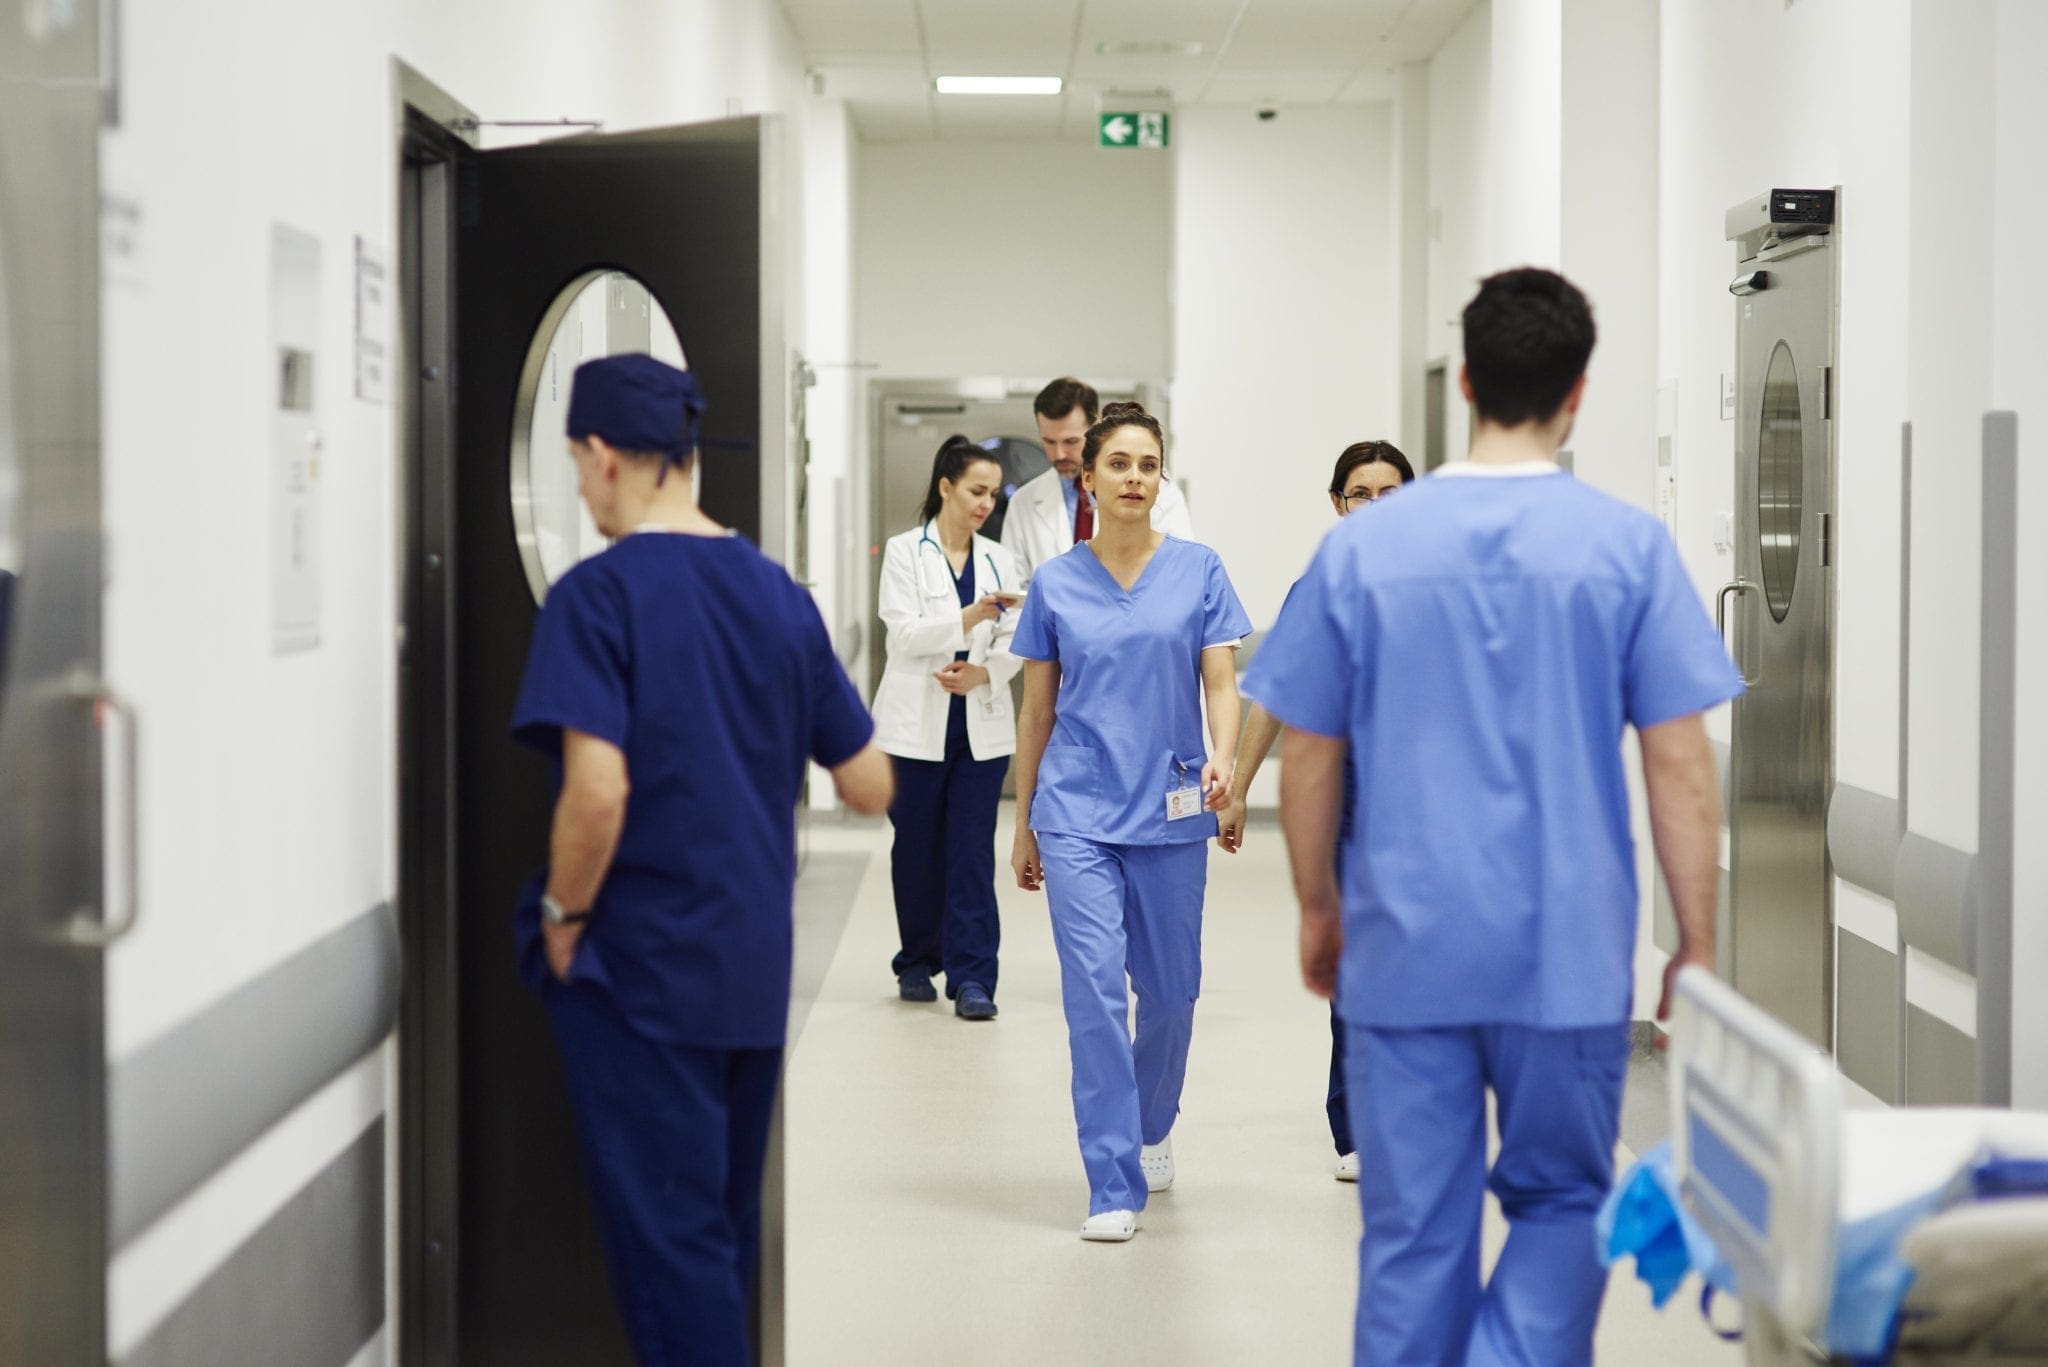 Busy nurses and doctors walking through corridor in hospital